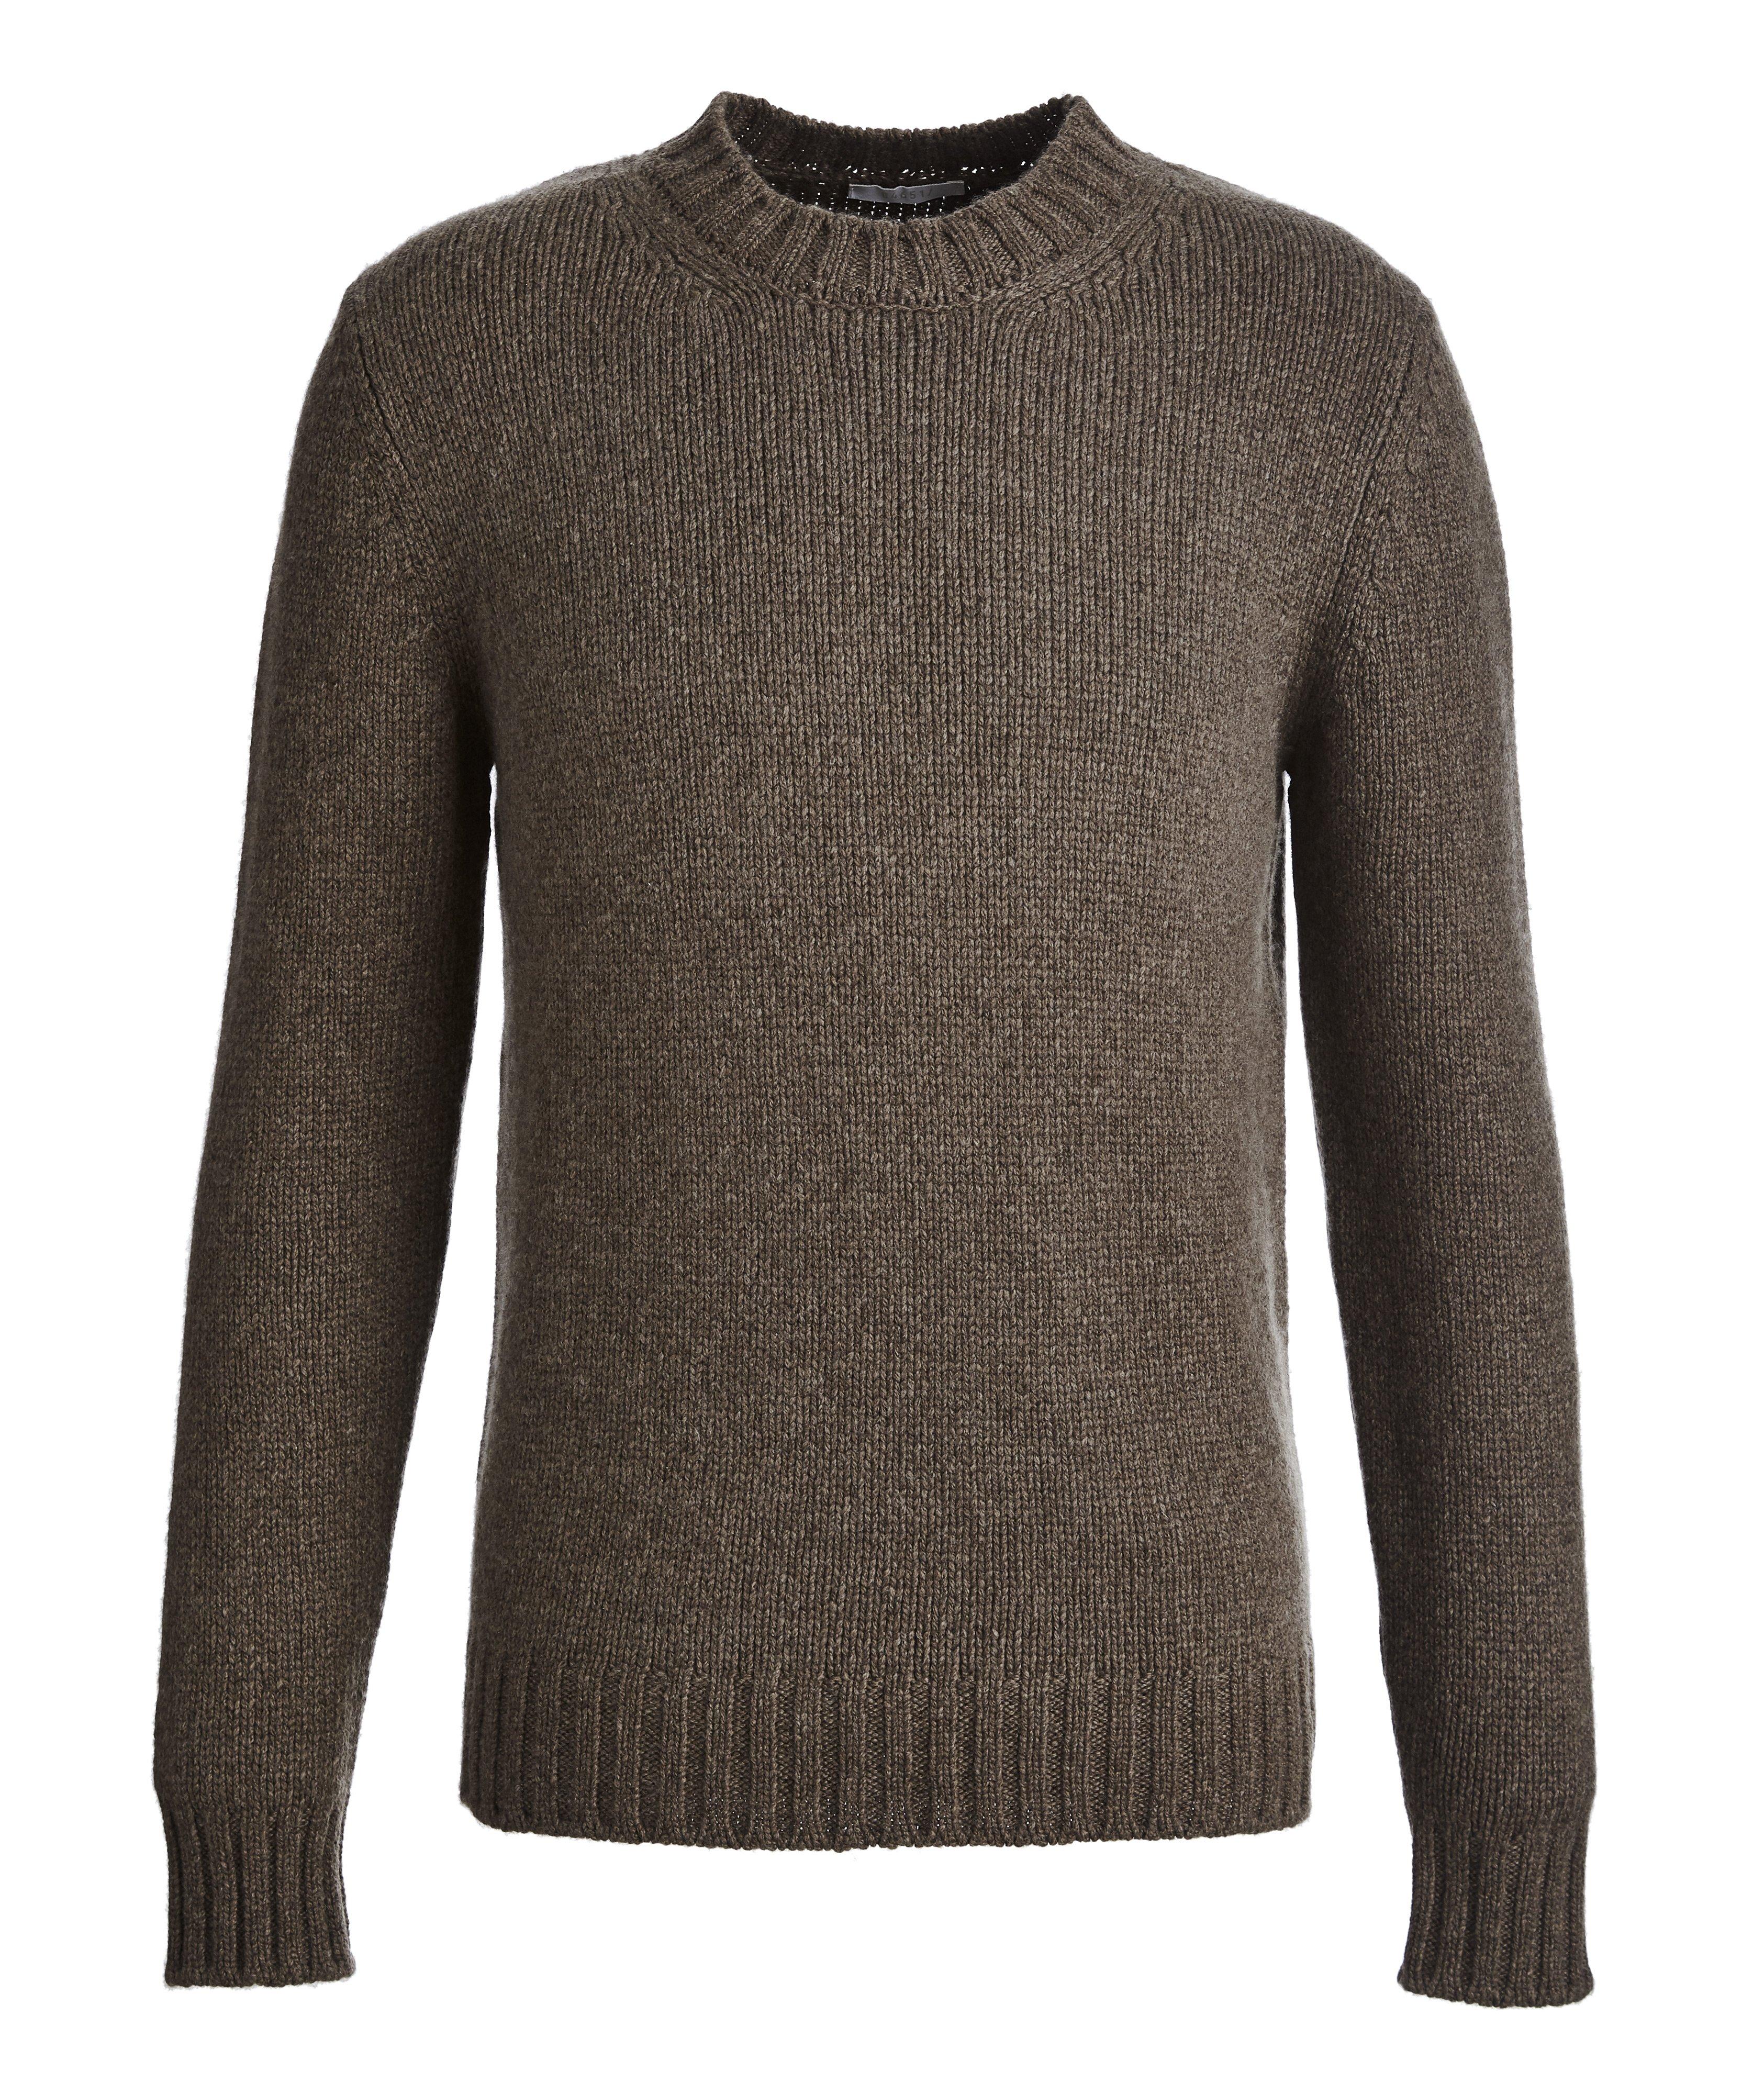 Cashmere Knit Sweater image 0